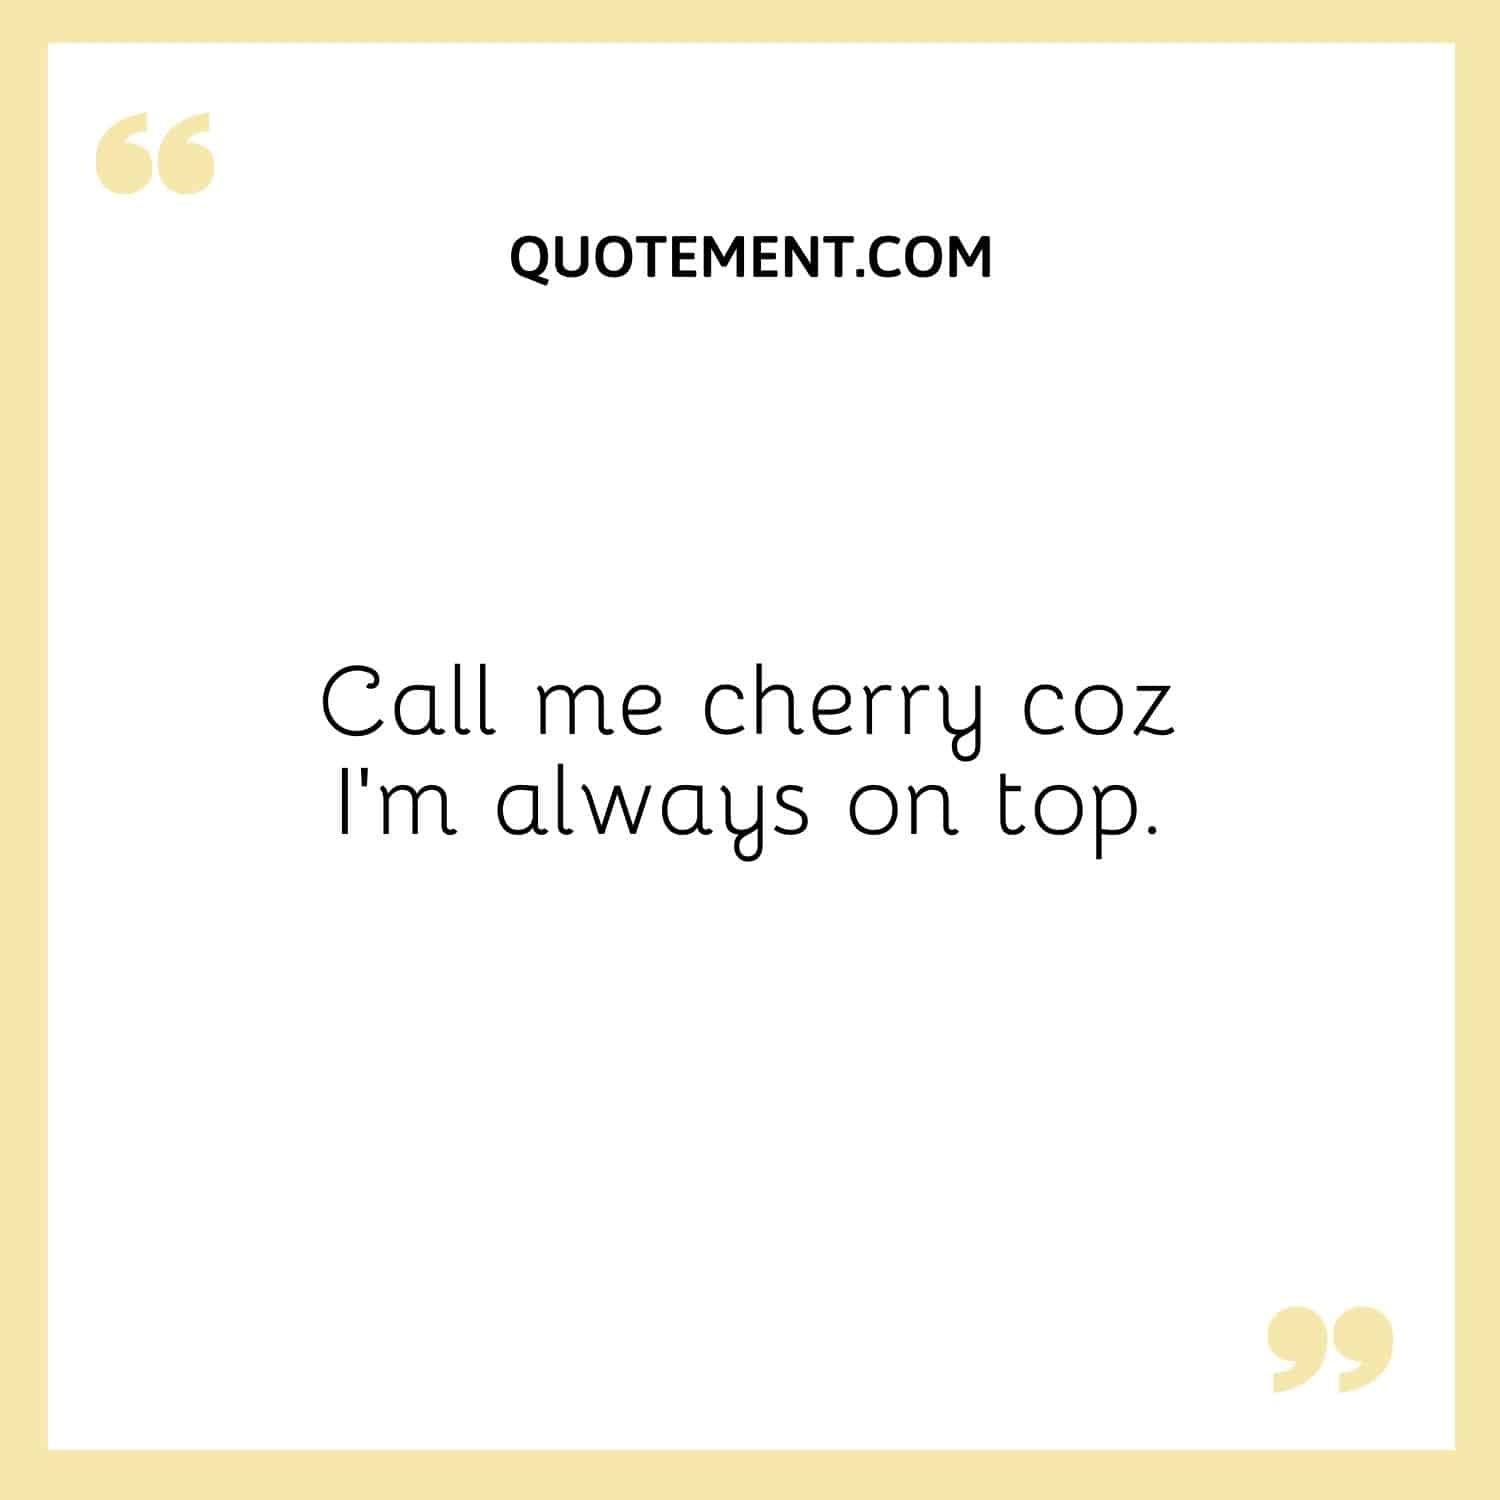 Call me cherry coz I’m always on top.